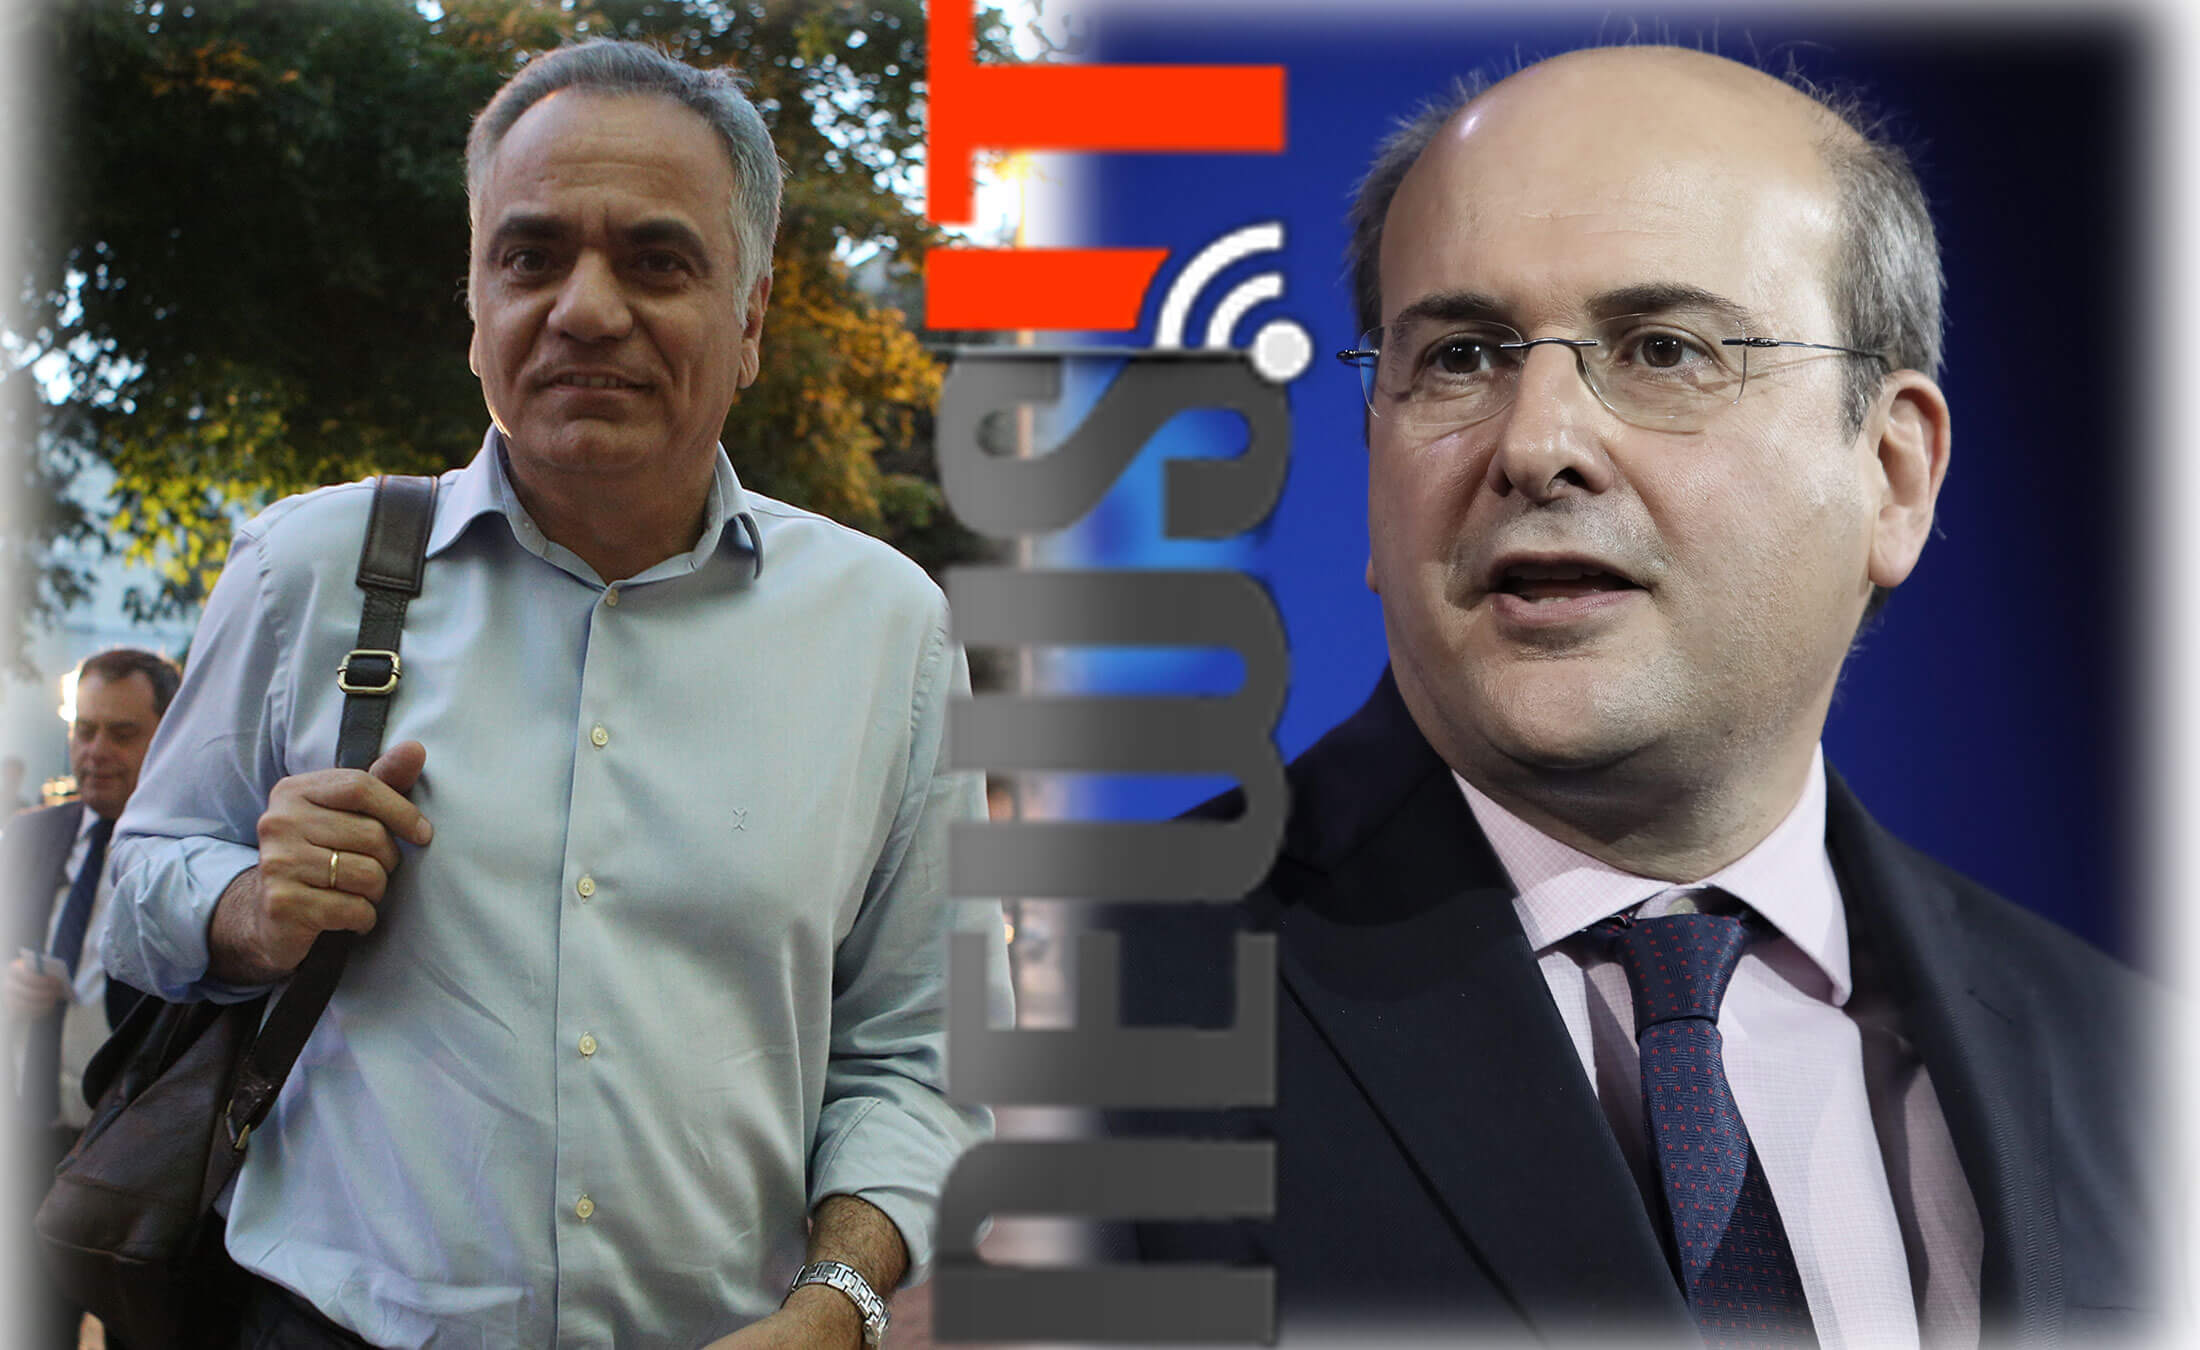 Debate στο newsit.gr: Πάνος Σκουρλέτης και Κωστής Χατζηδάκης – Στείλτε τα ερωτήματά σας